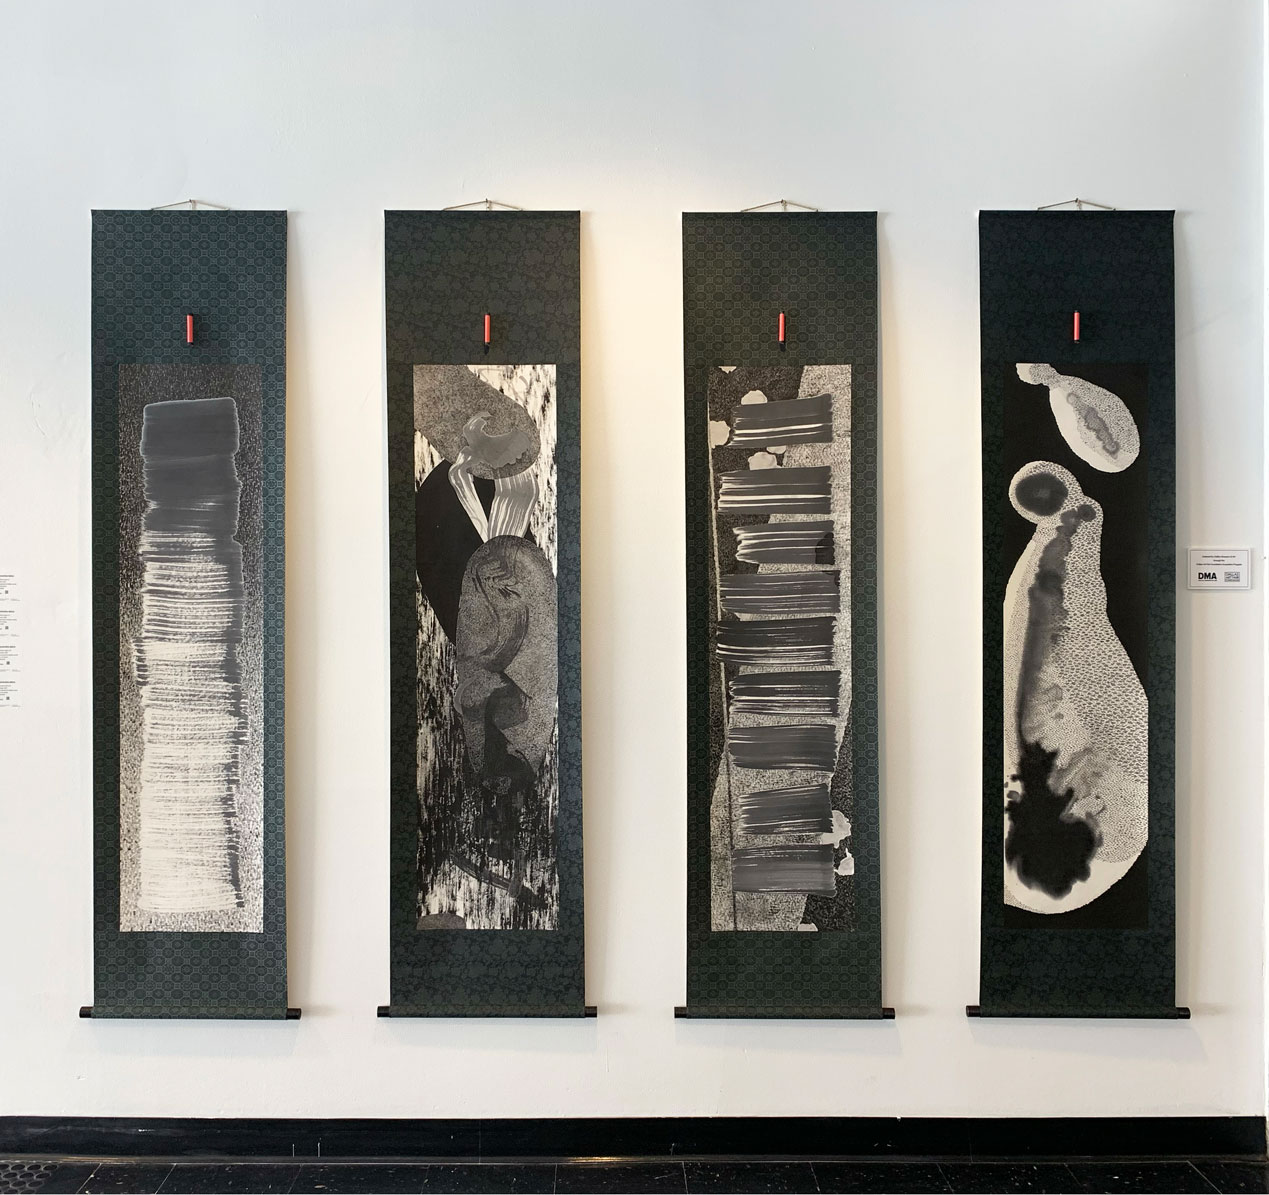 The Dallas Museum of Art acquires "KuroKuroShiro – The Four Seasons" by art professor Nishiki Sugawara-Beda.